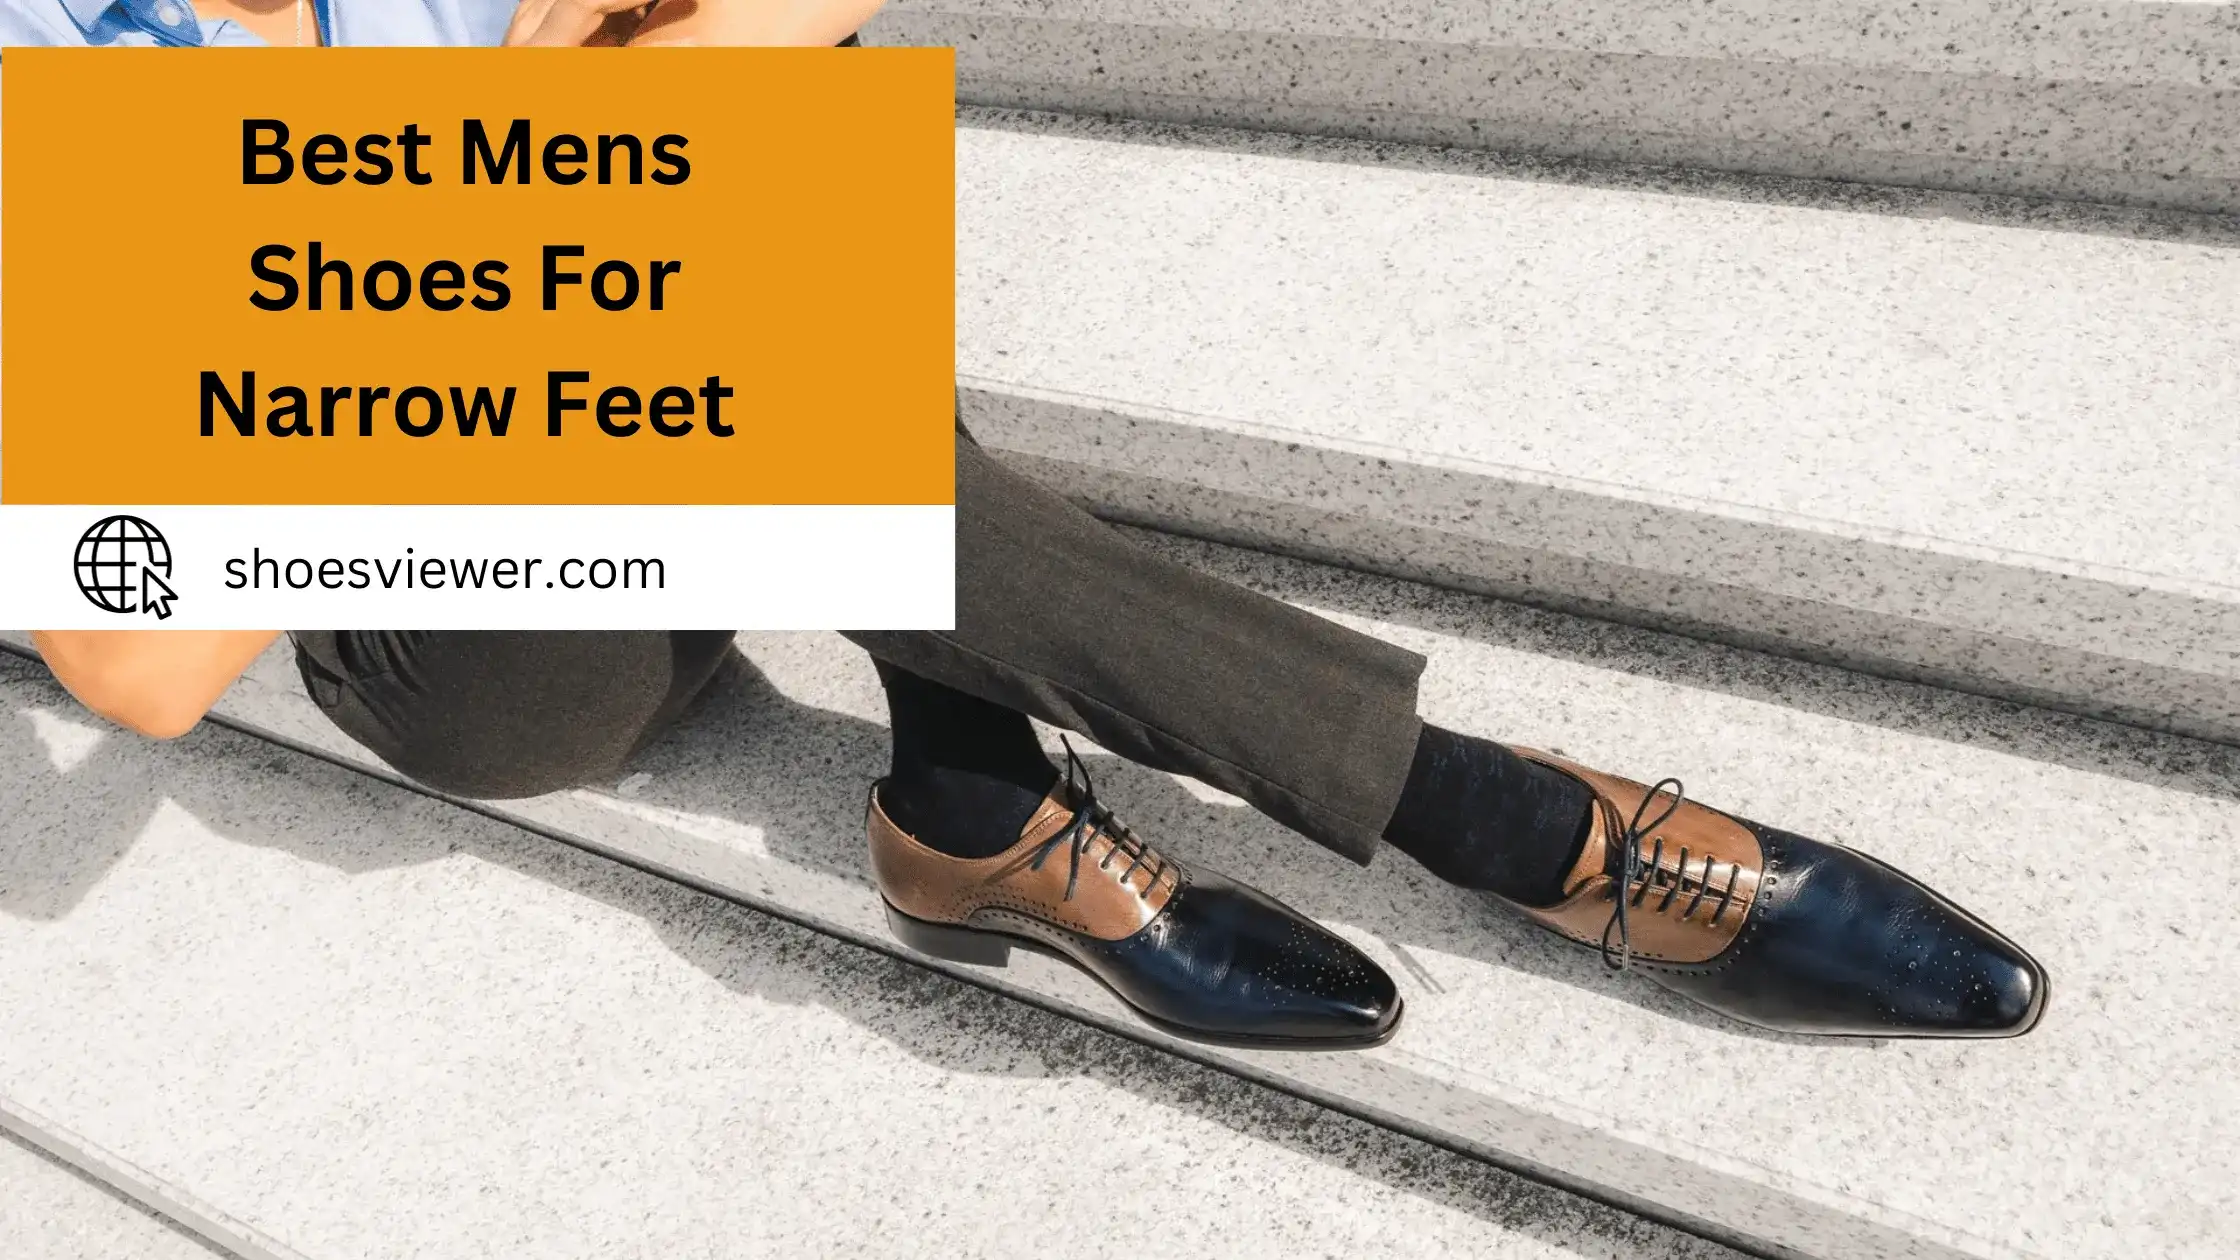 Best Mens Shoes For Narrow Feet - Expert Analysis